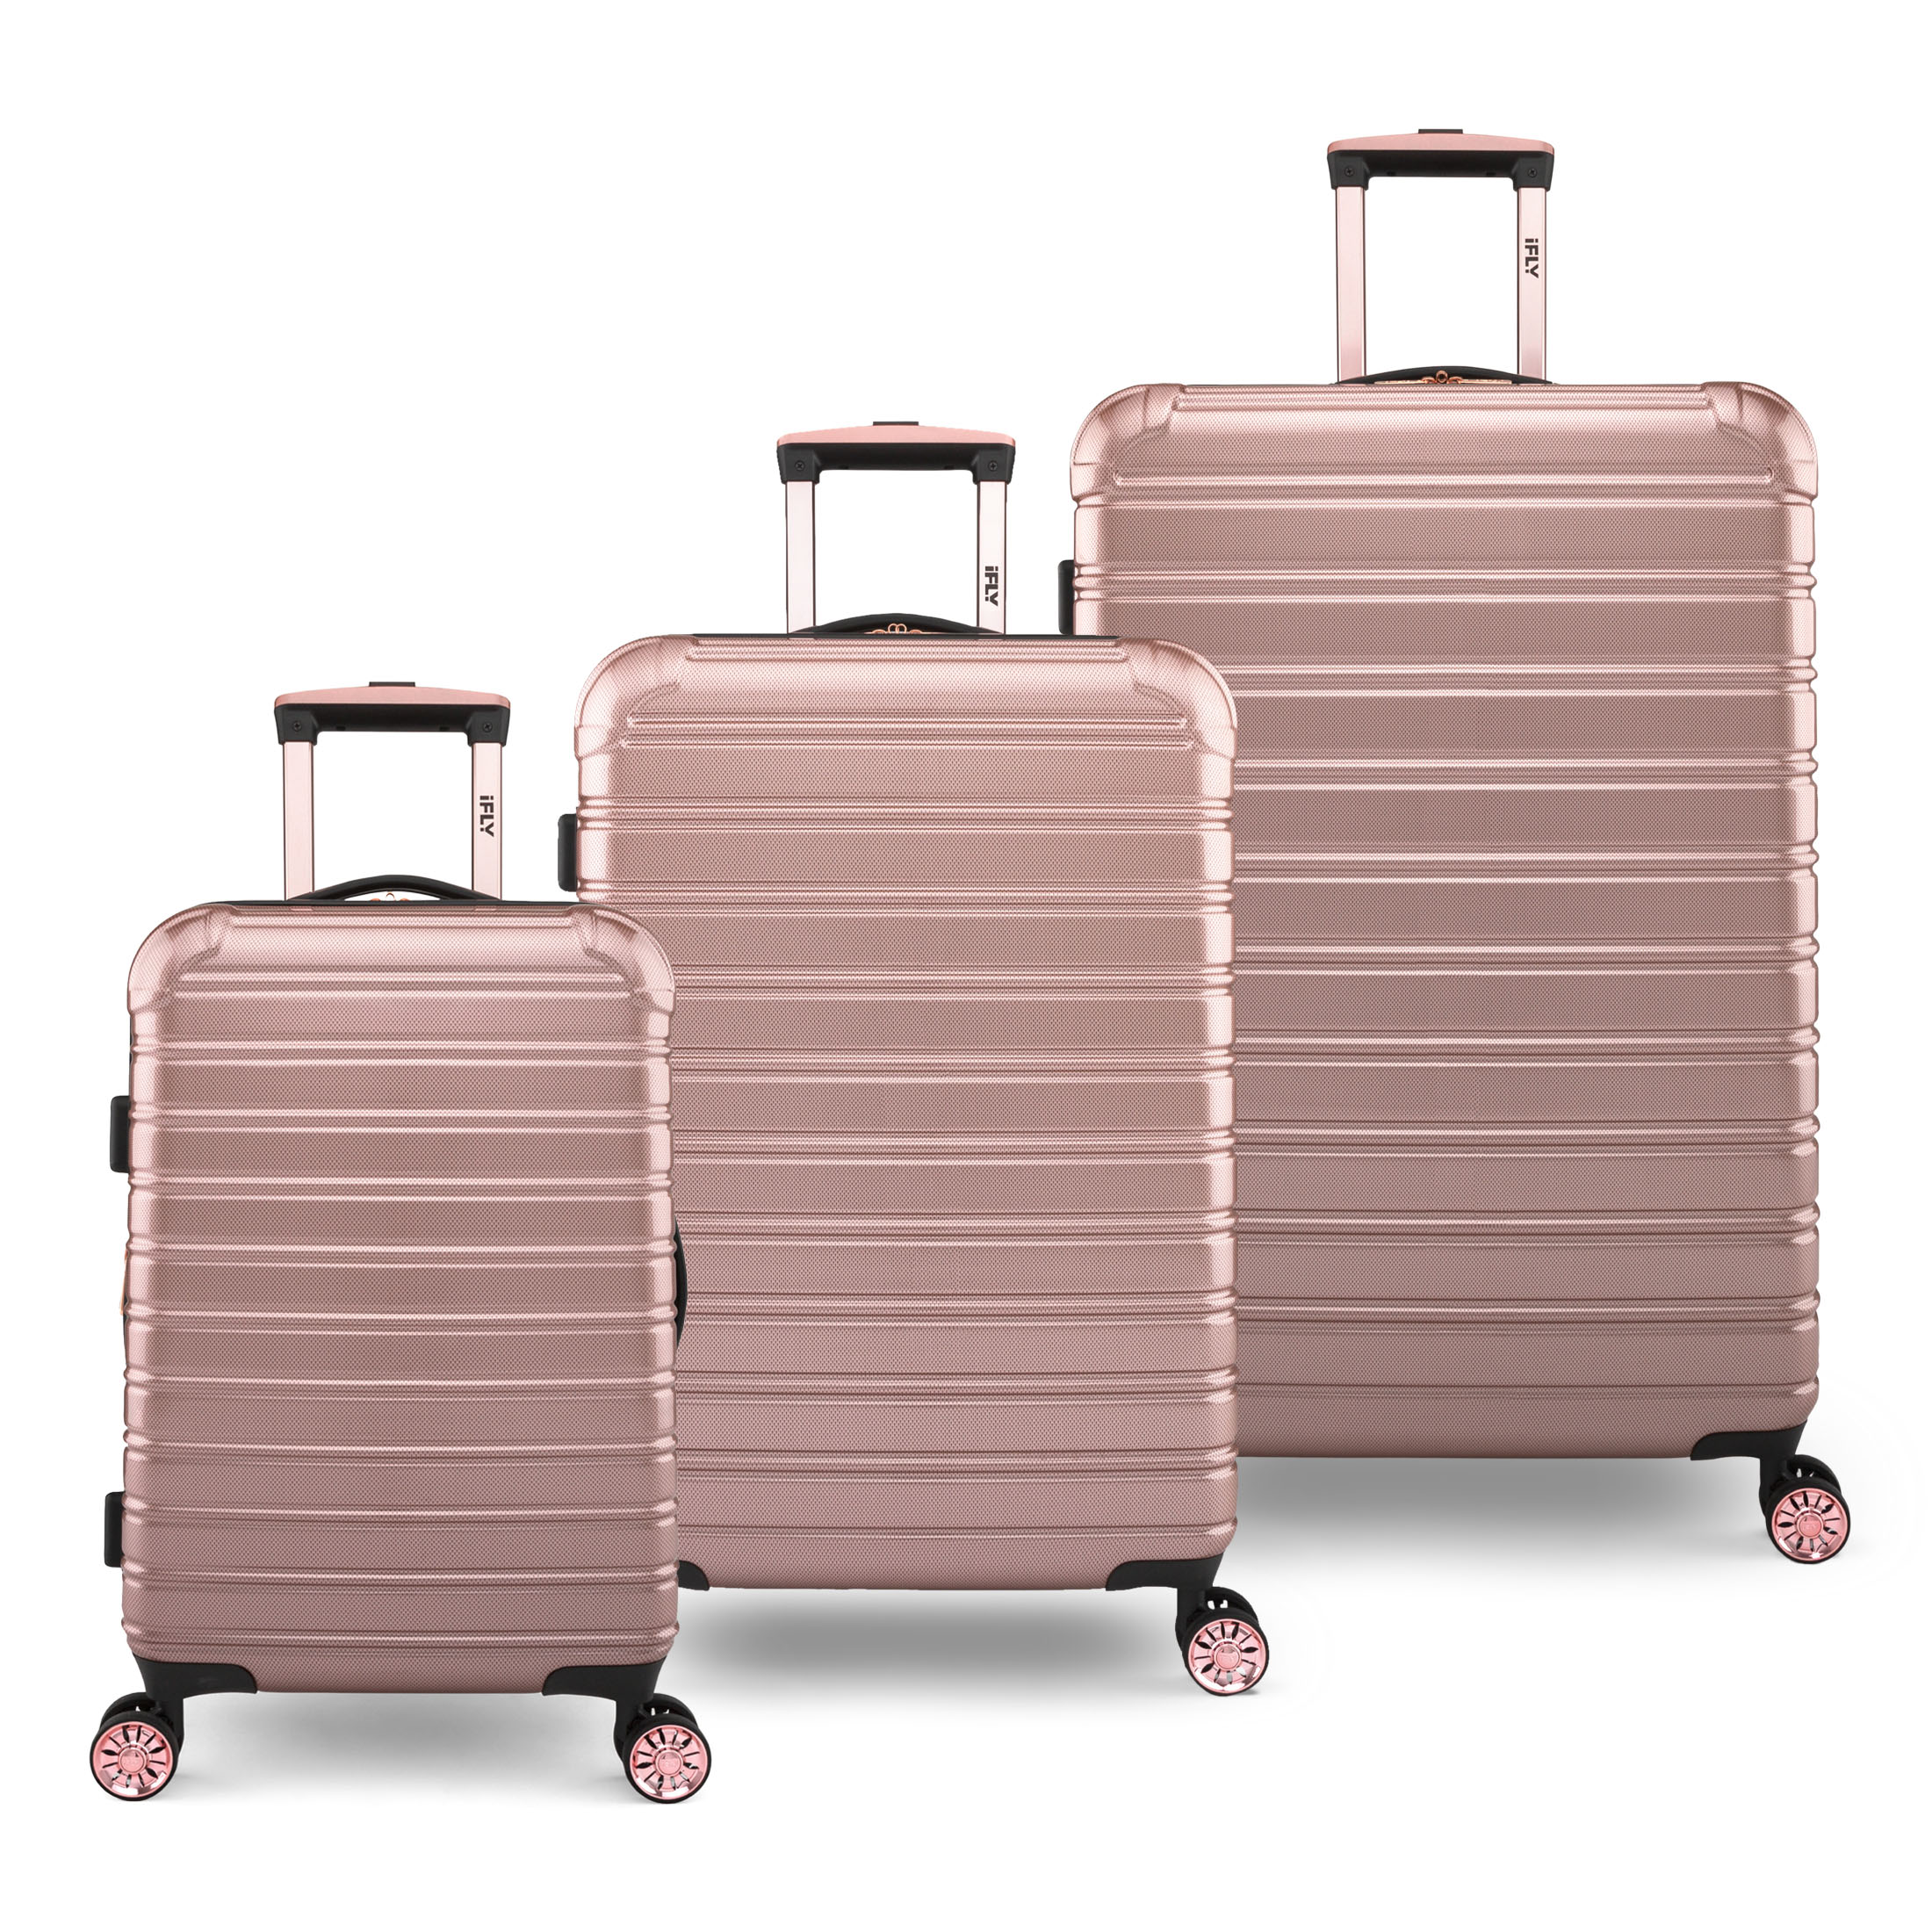 iFLY Hardside Luggage Fibertech 3 Piece Set, 20" Carry-on Luggage, 24" Checked Luggage and 28" Checked Luggage, Rose Gold - image 1 of 12